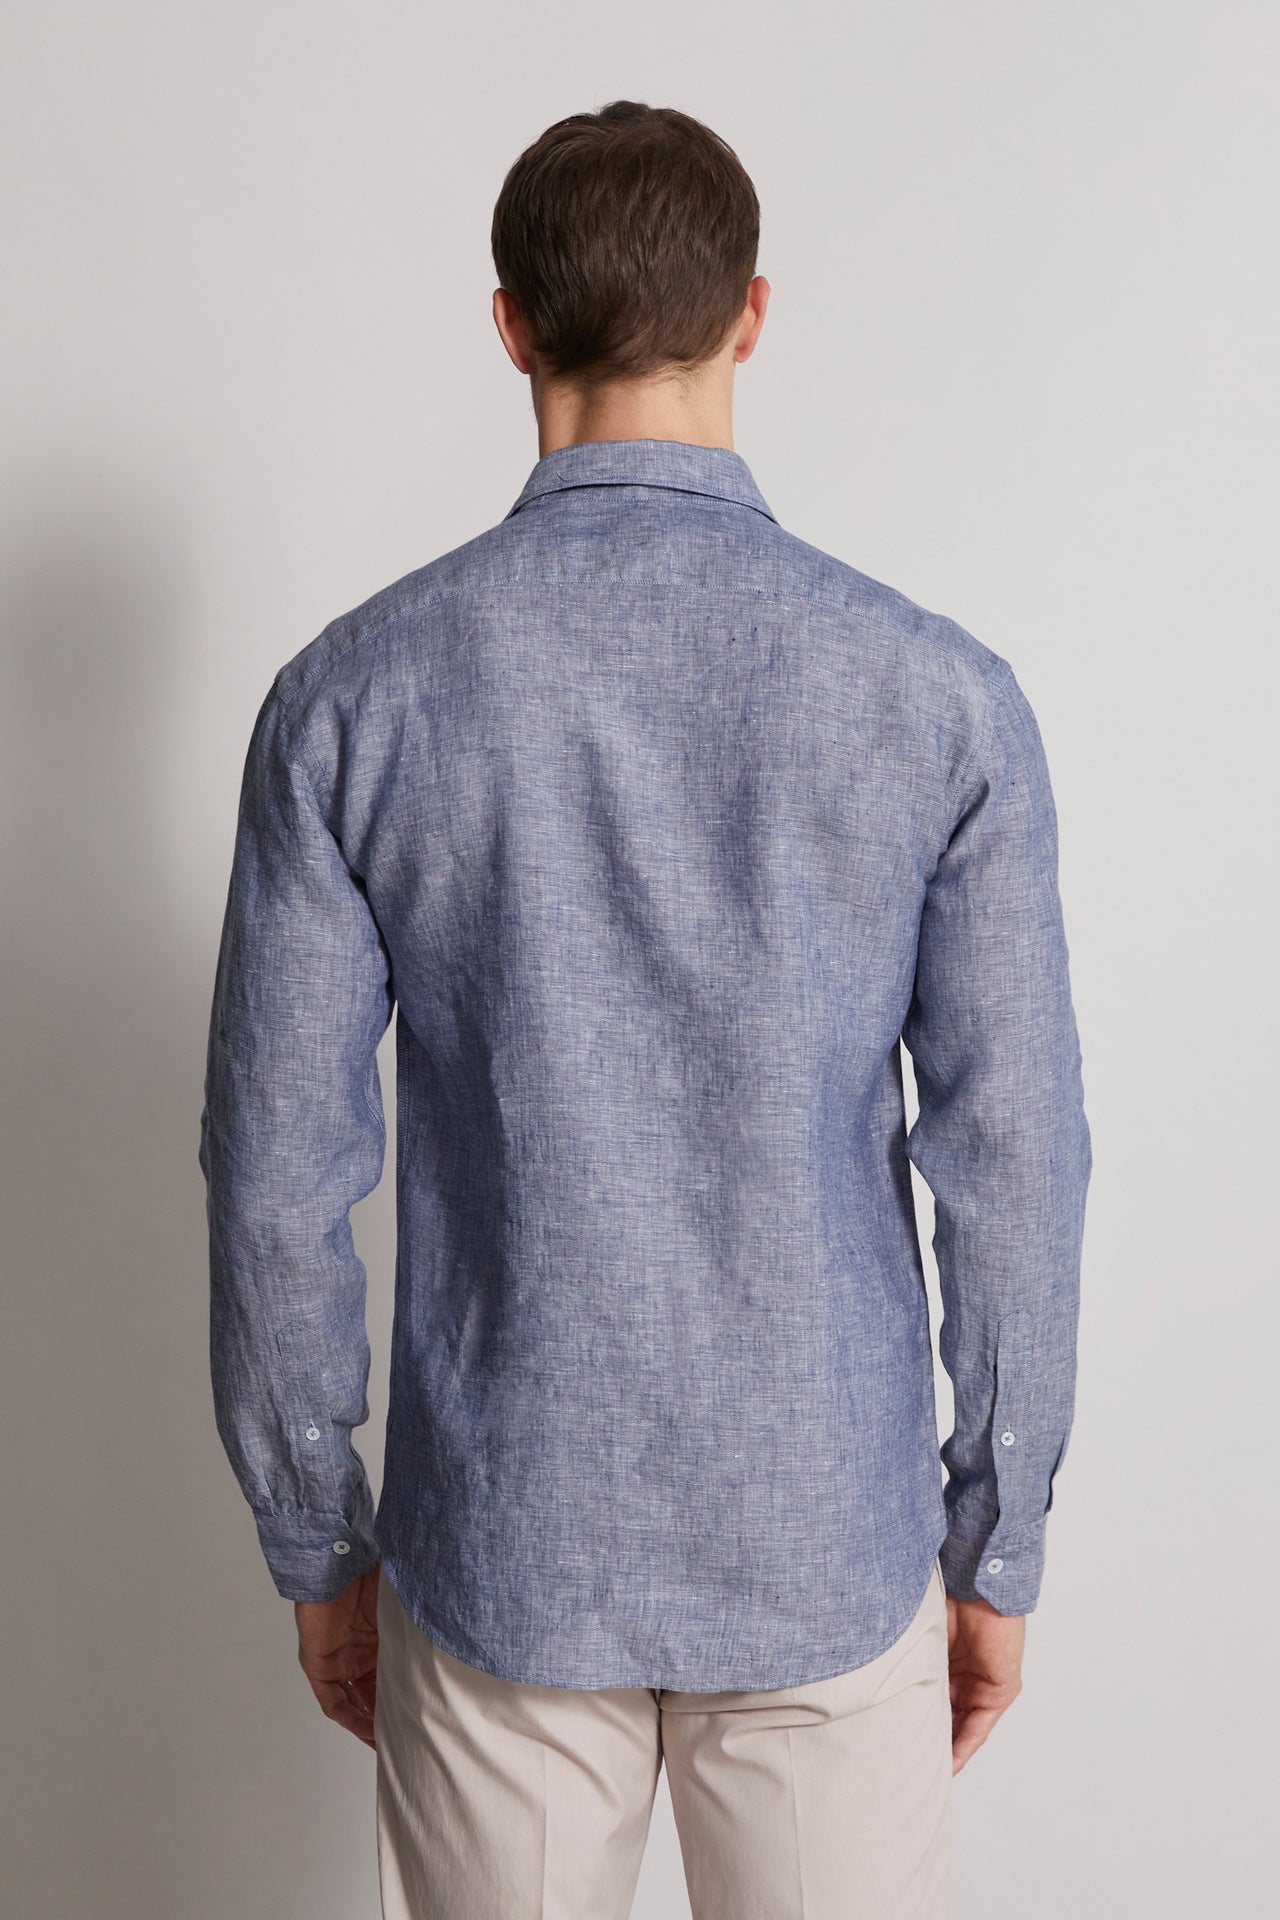 mens blue linen shirt in denim - back view 